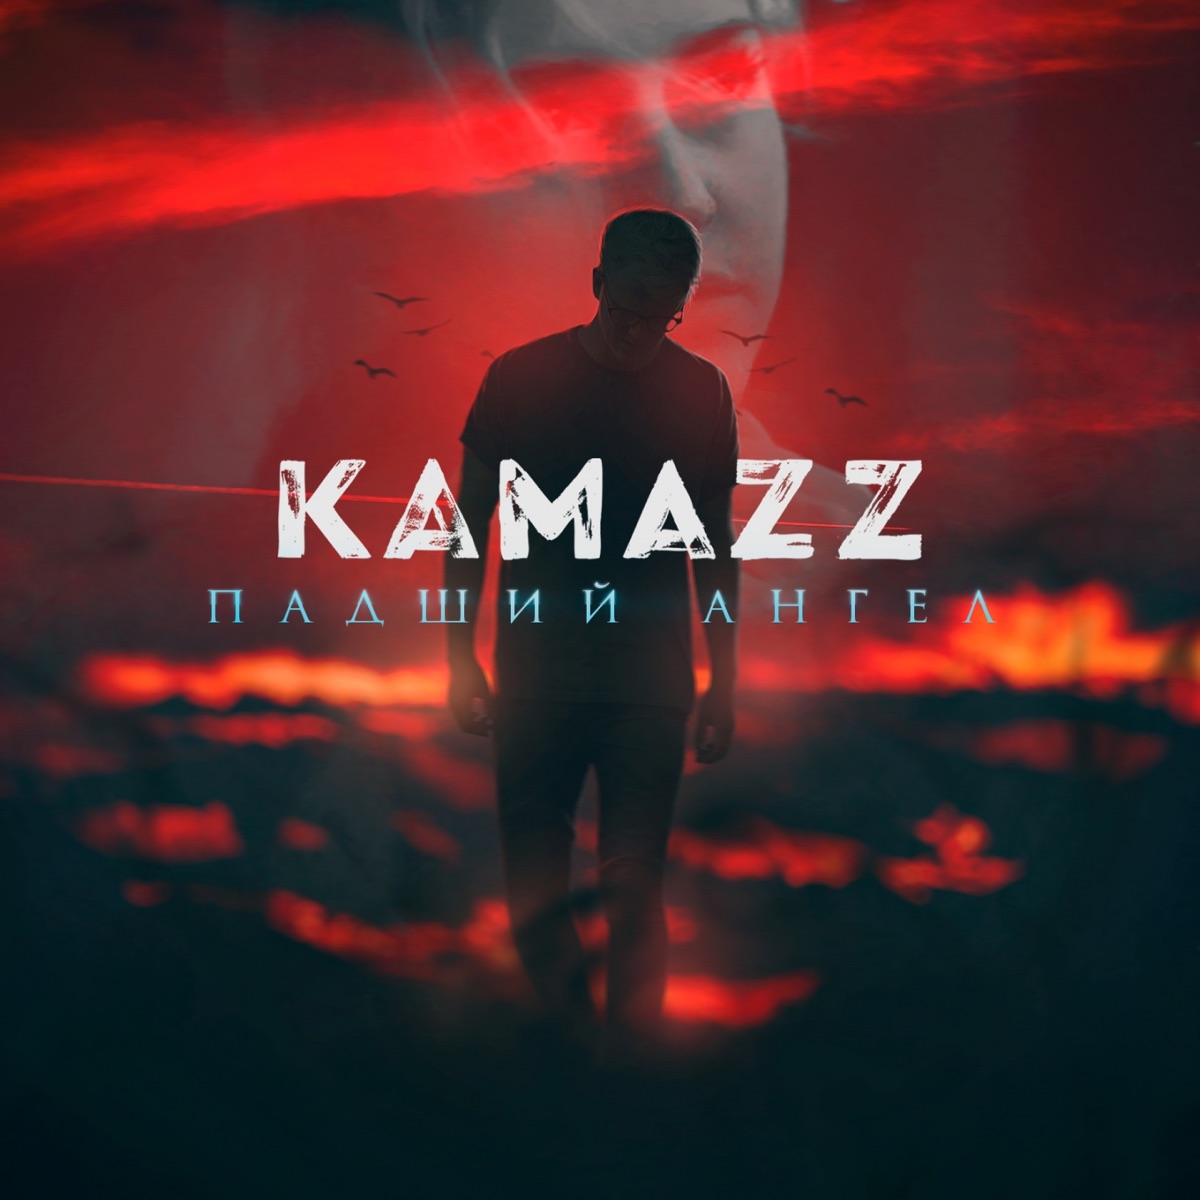 Камаз слушать как живешь. Падший ангел Kamazz. Kamazz певец. КАМАЗ Kamazz. Группа Kamazz фото.